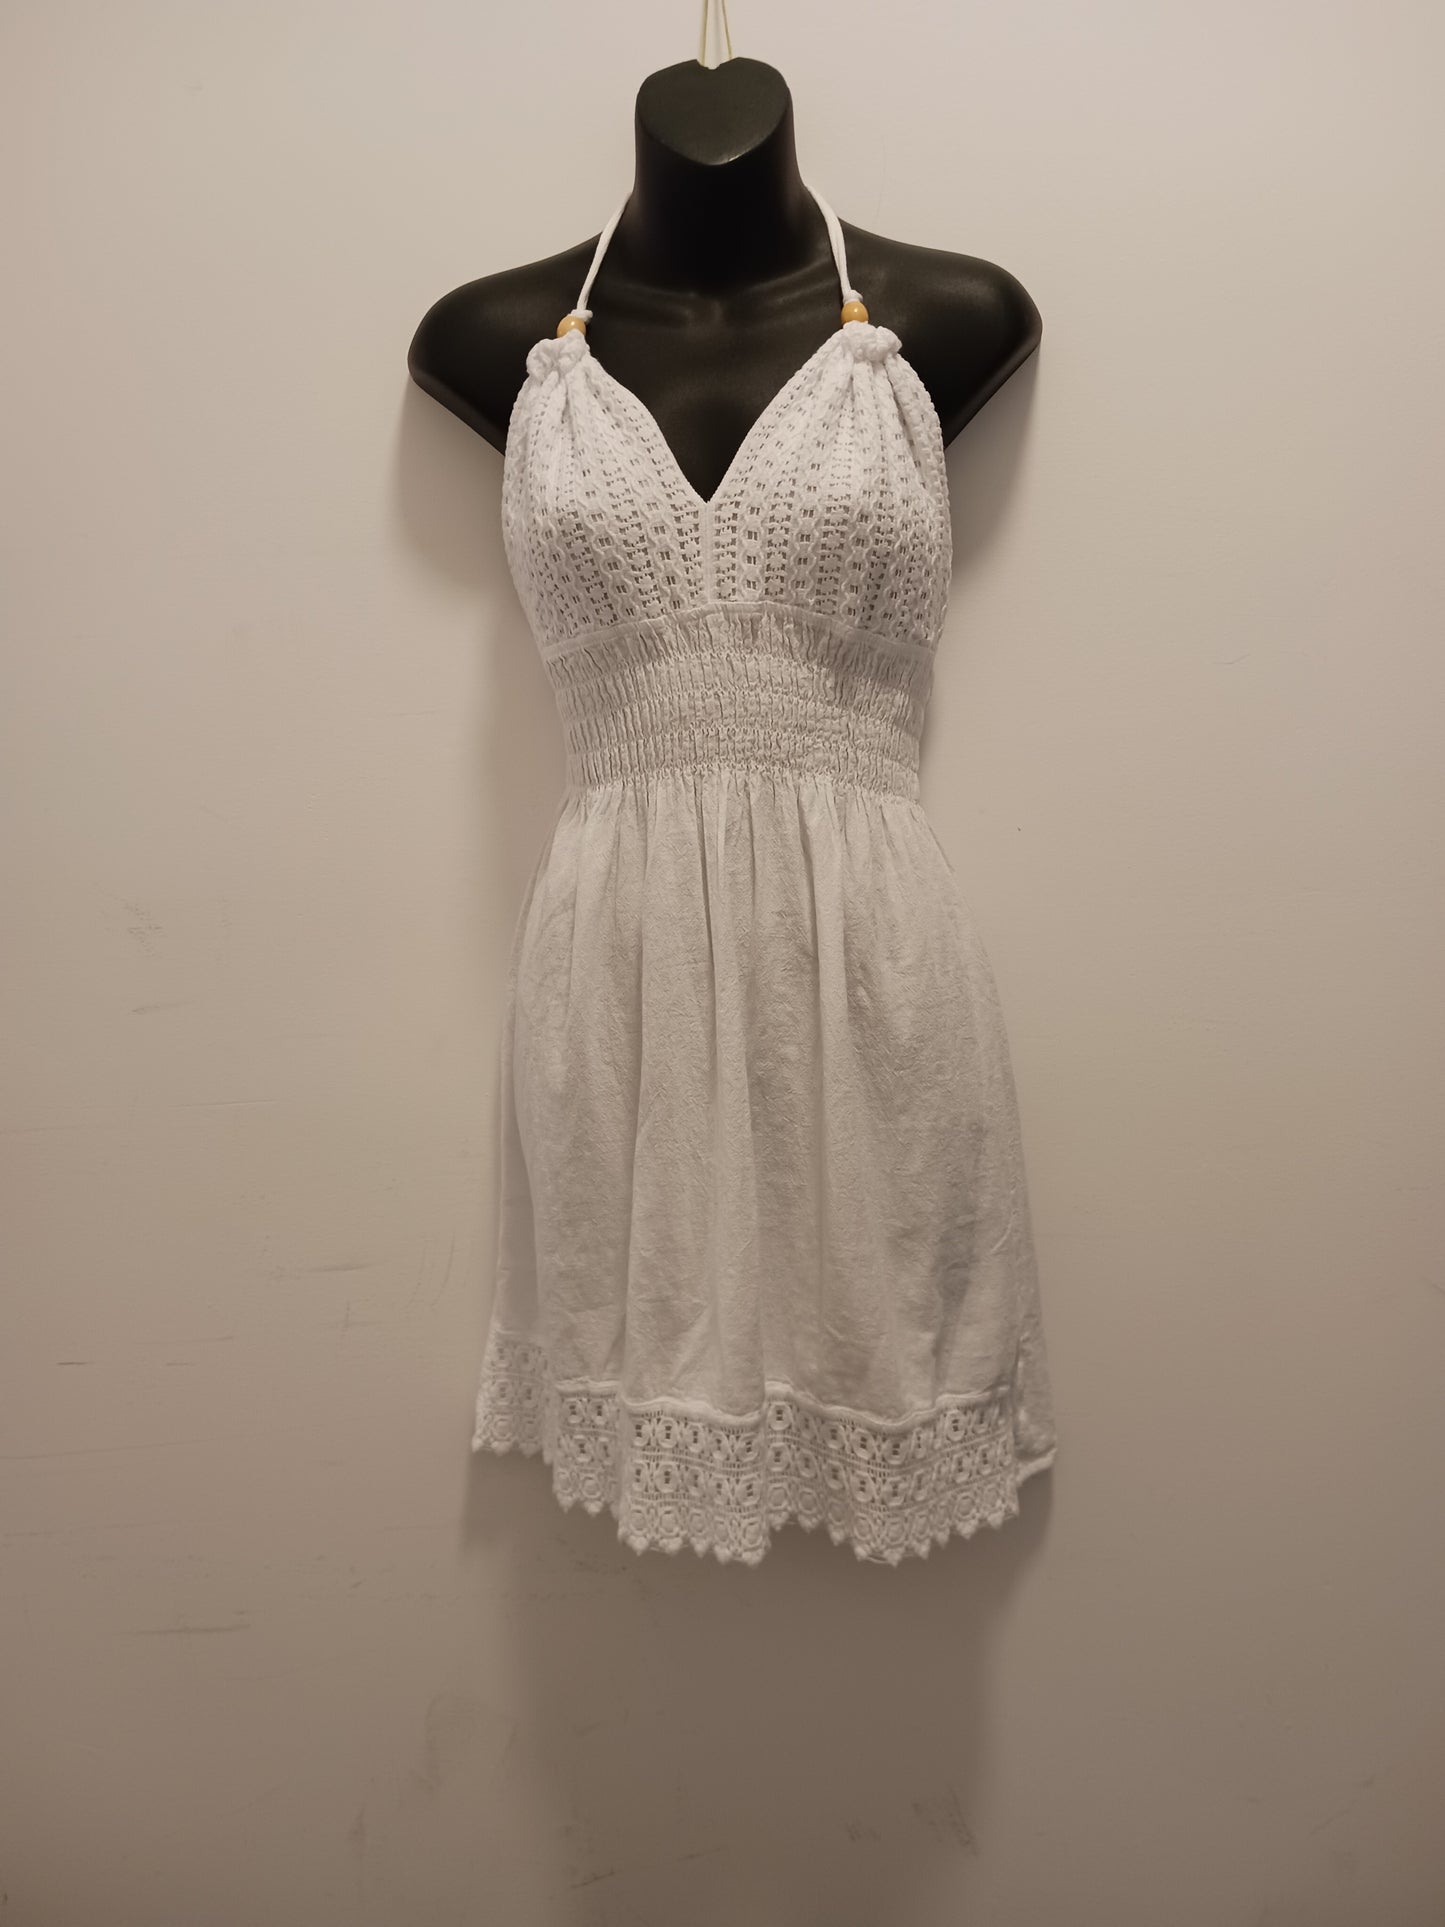 Cotton Collection Woman's Bead Halter Dress D203